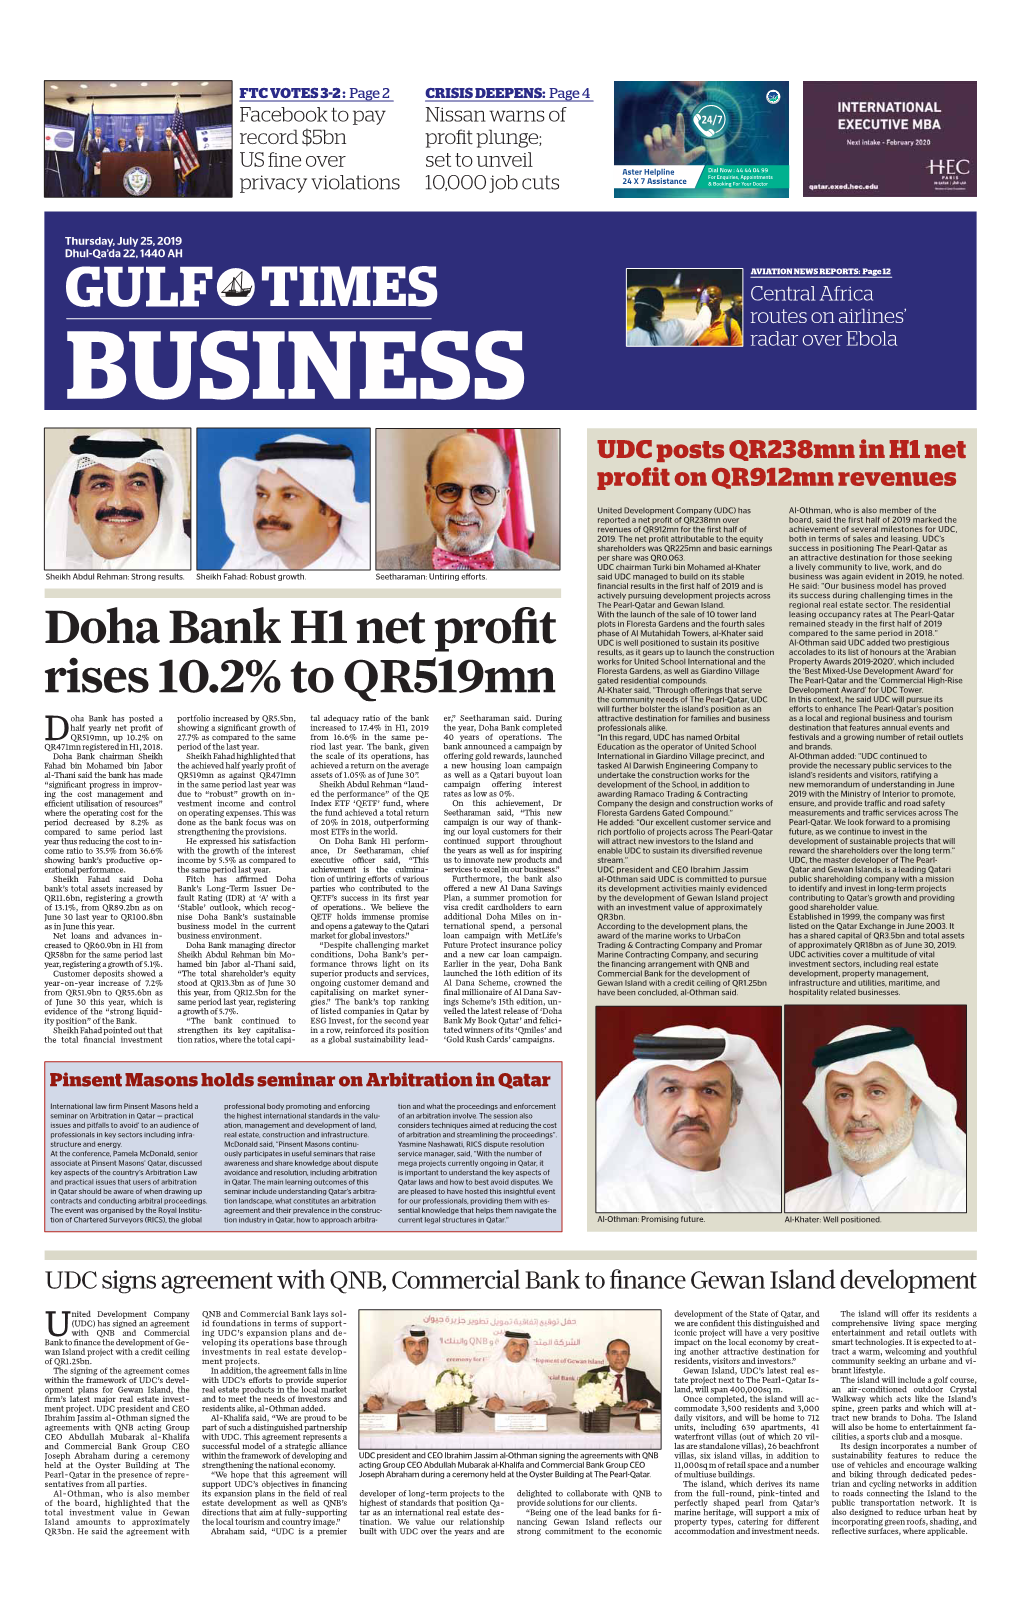 Doha Bank H1 Net Profit Rises 10.2% to Qr519mn